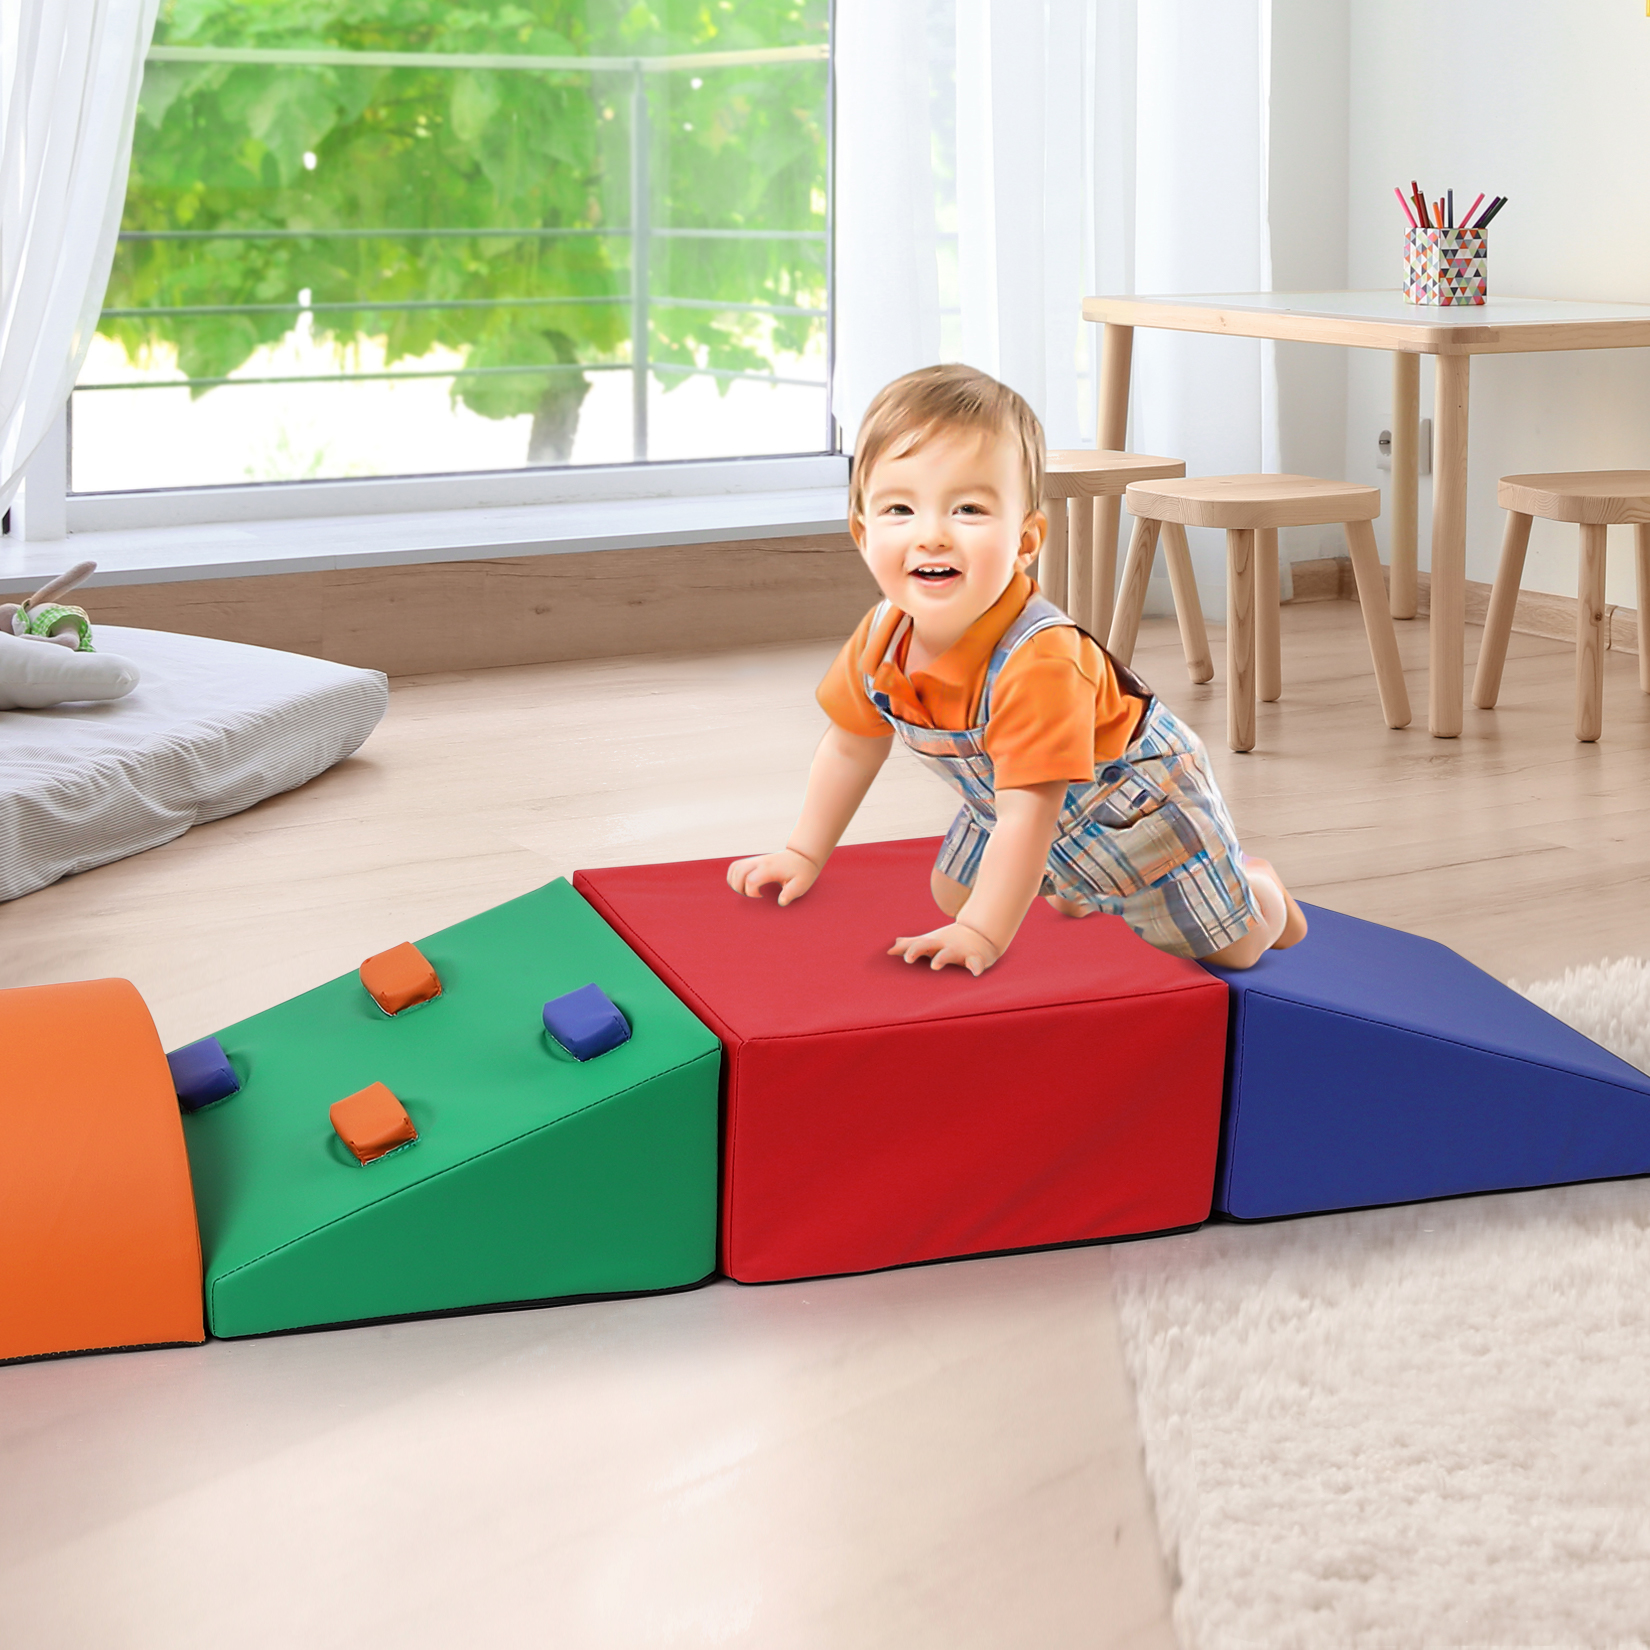 Soft Climbing Set,Foam Climbing Blocks for Toddlers , Climbing, Crawling Play Set,5PCS - image 2 of 7